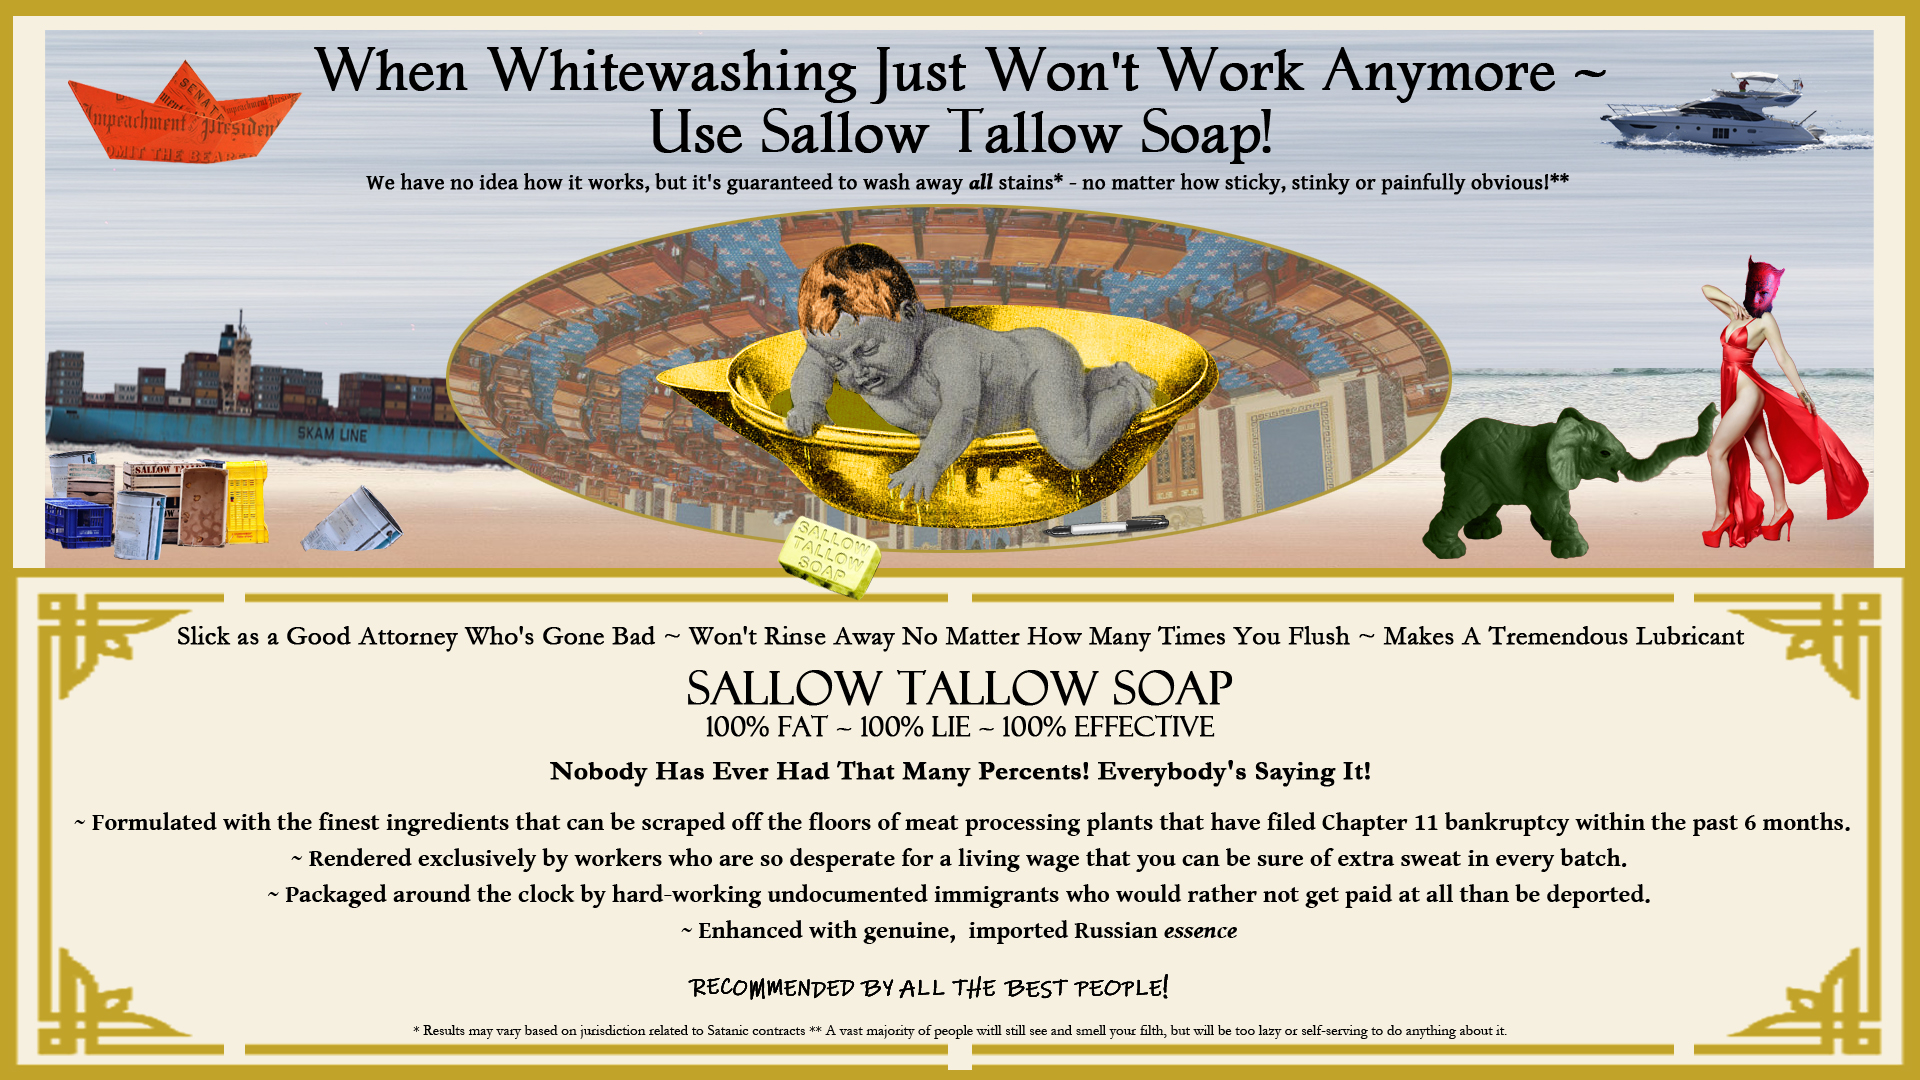 Sallow Tallow Soap : wipjenni original collage art : traditional & digital collage